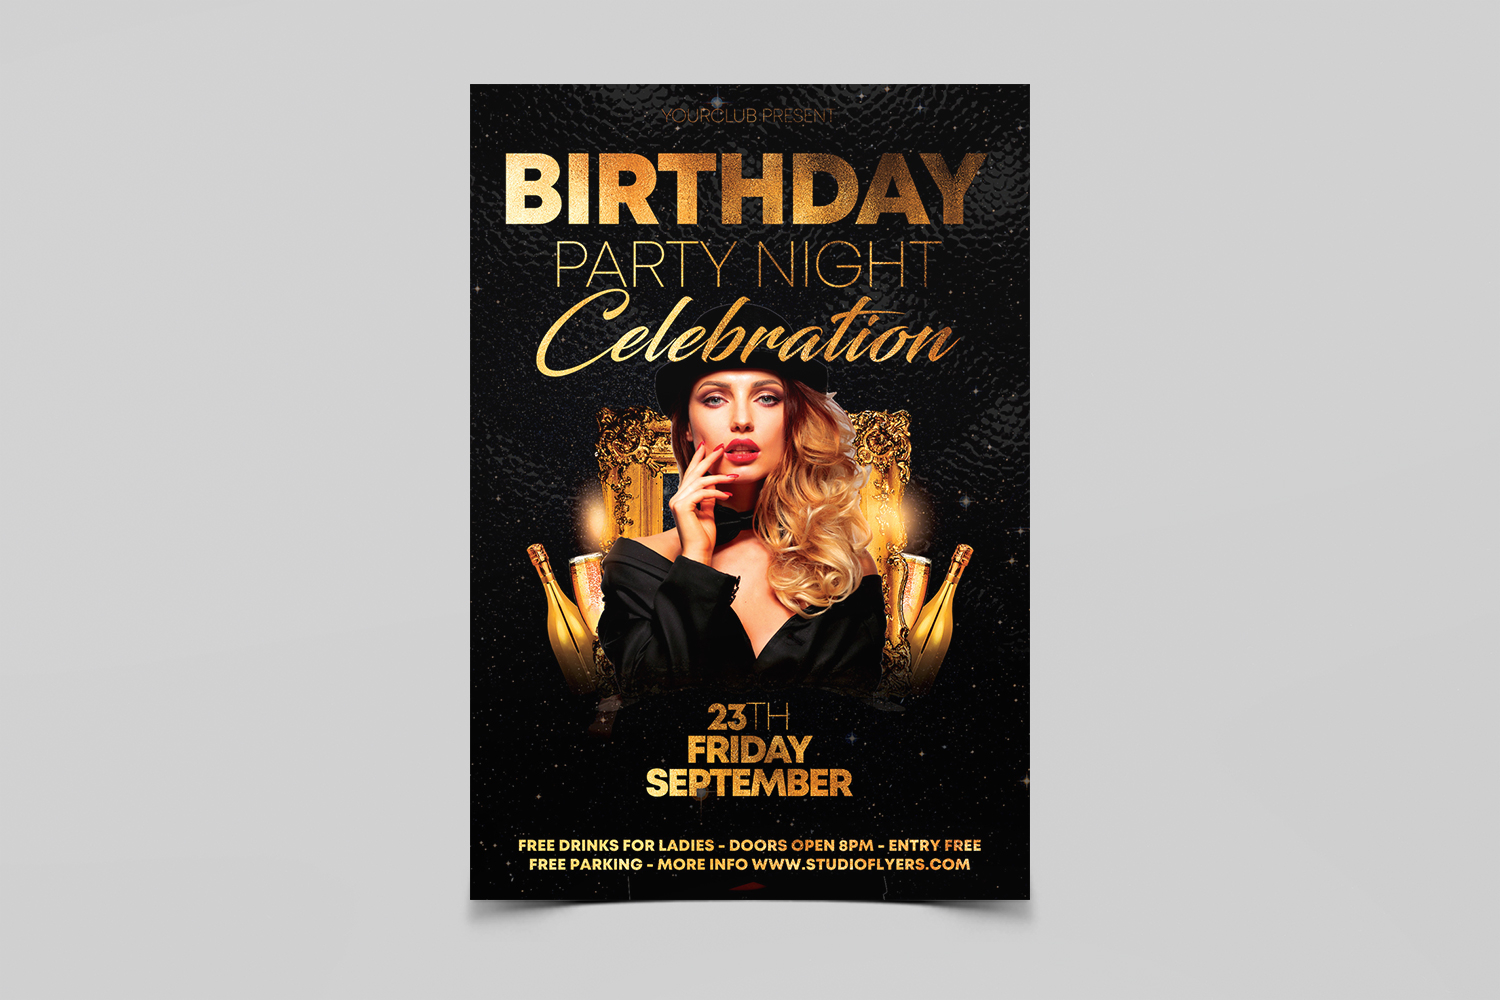 Birthday Celebration Party Free PSD Flyer Template  FreebieDesign Within Birthday Celebration Flyer Template With Regard To Birthday Celebration Flyer Template